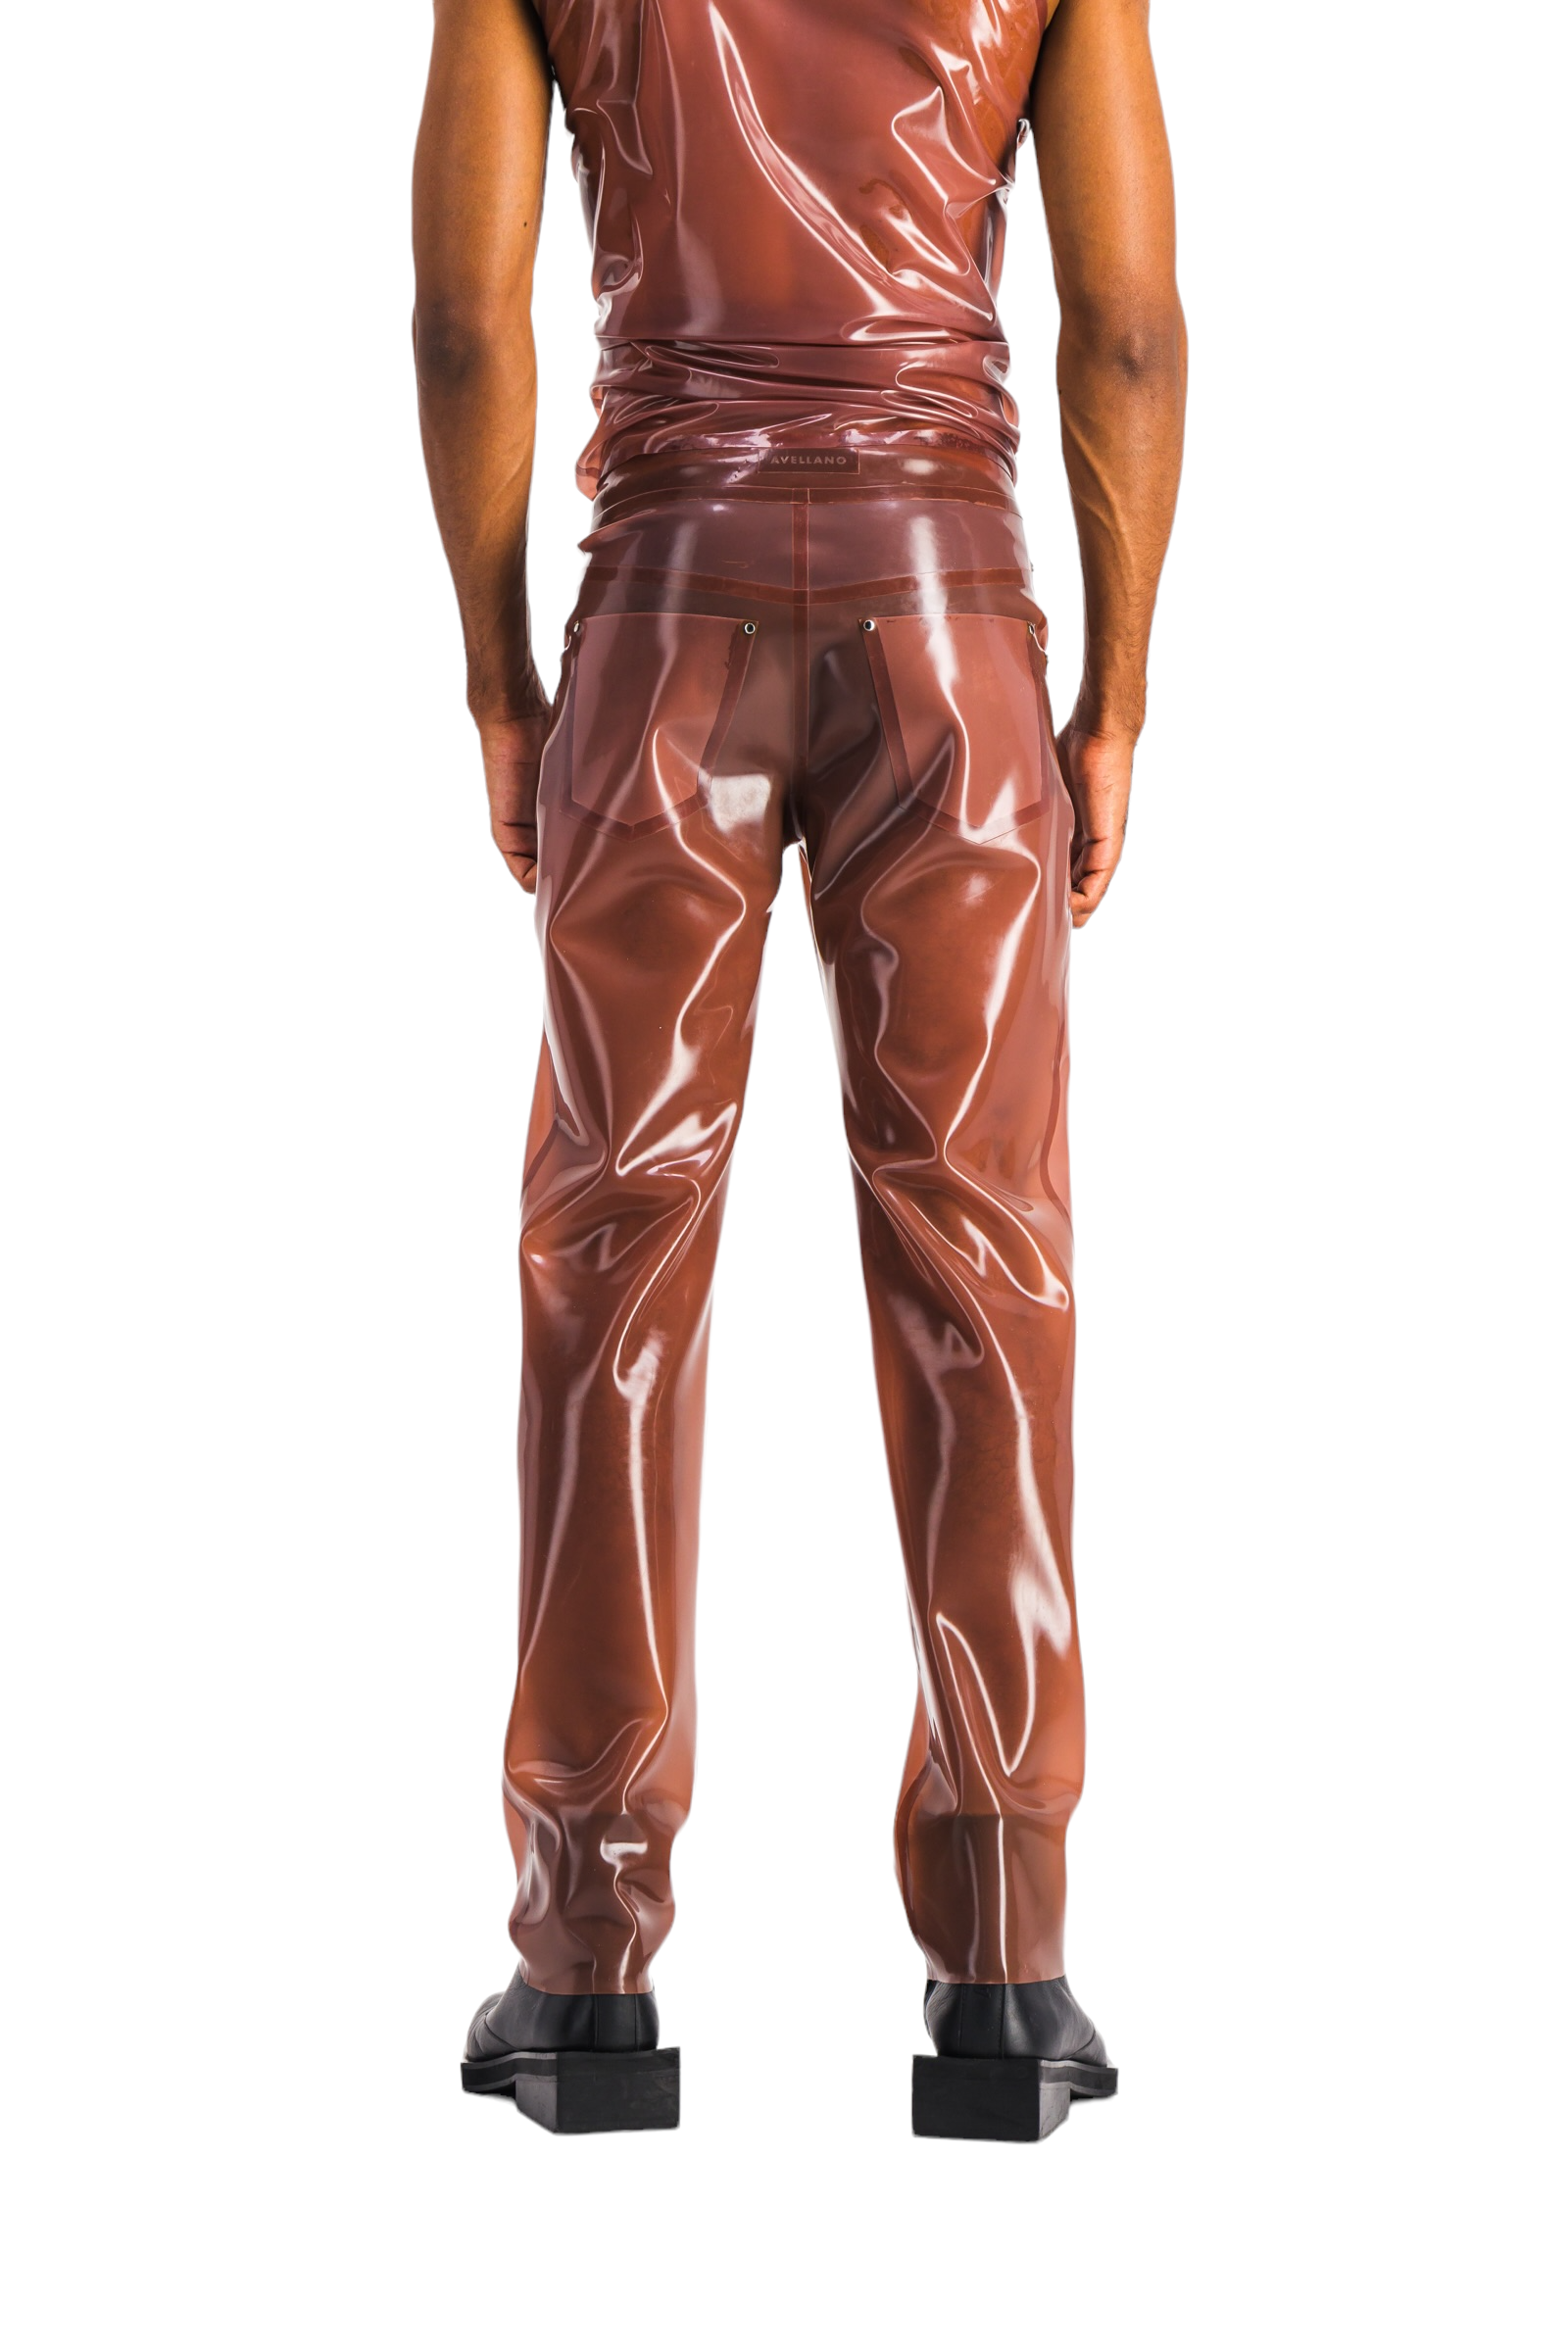 Latex Men's Leggings With Zipper buy Online | Store Rubber Loft